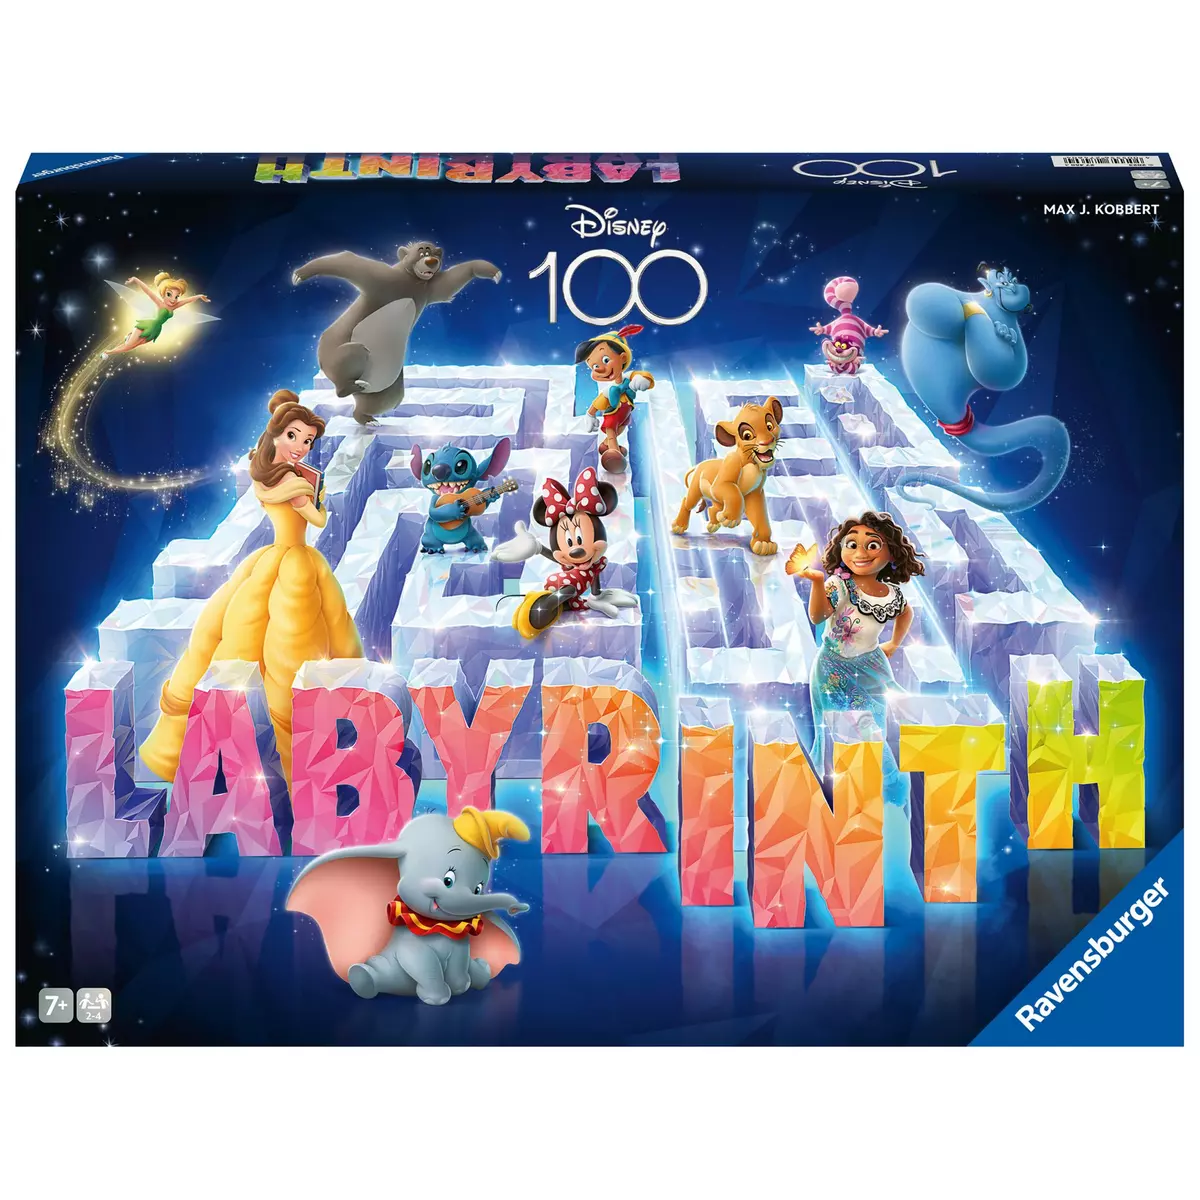 BANDAI Jeu Labyrinthe Disney 100ème